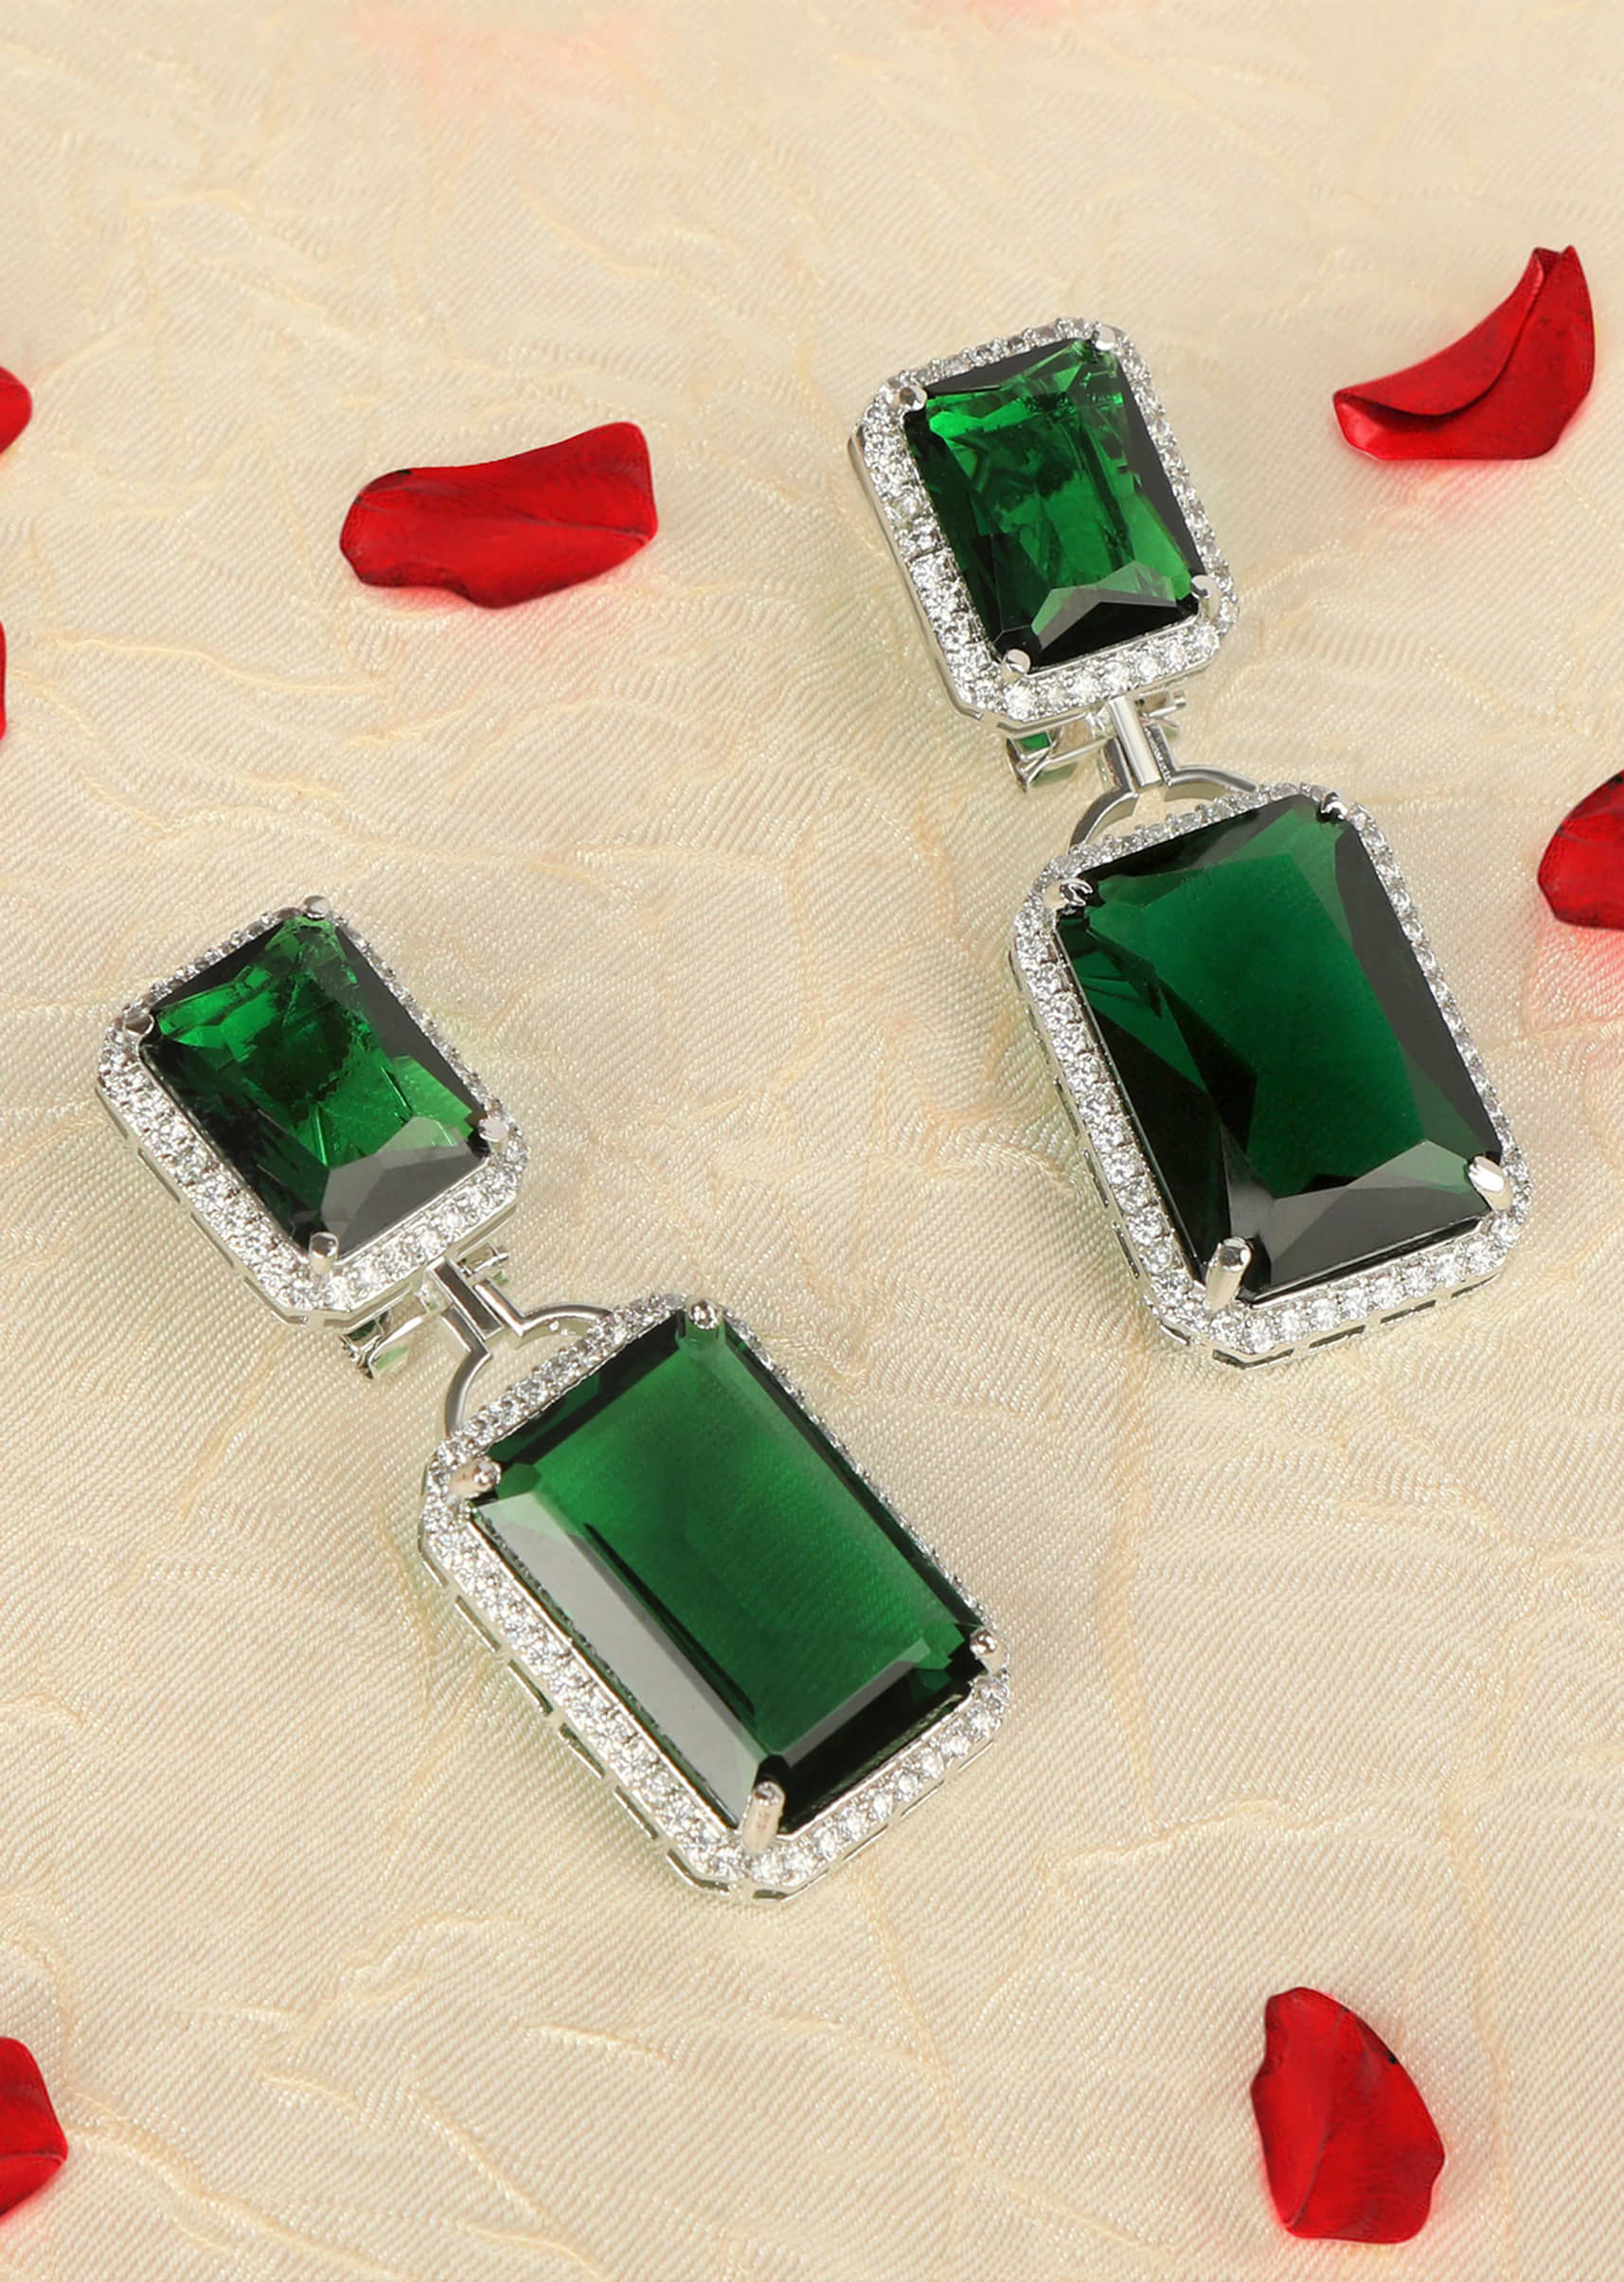 2 Green Stones Dangled Earrings With Faux Diamonds